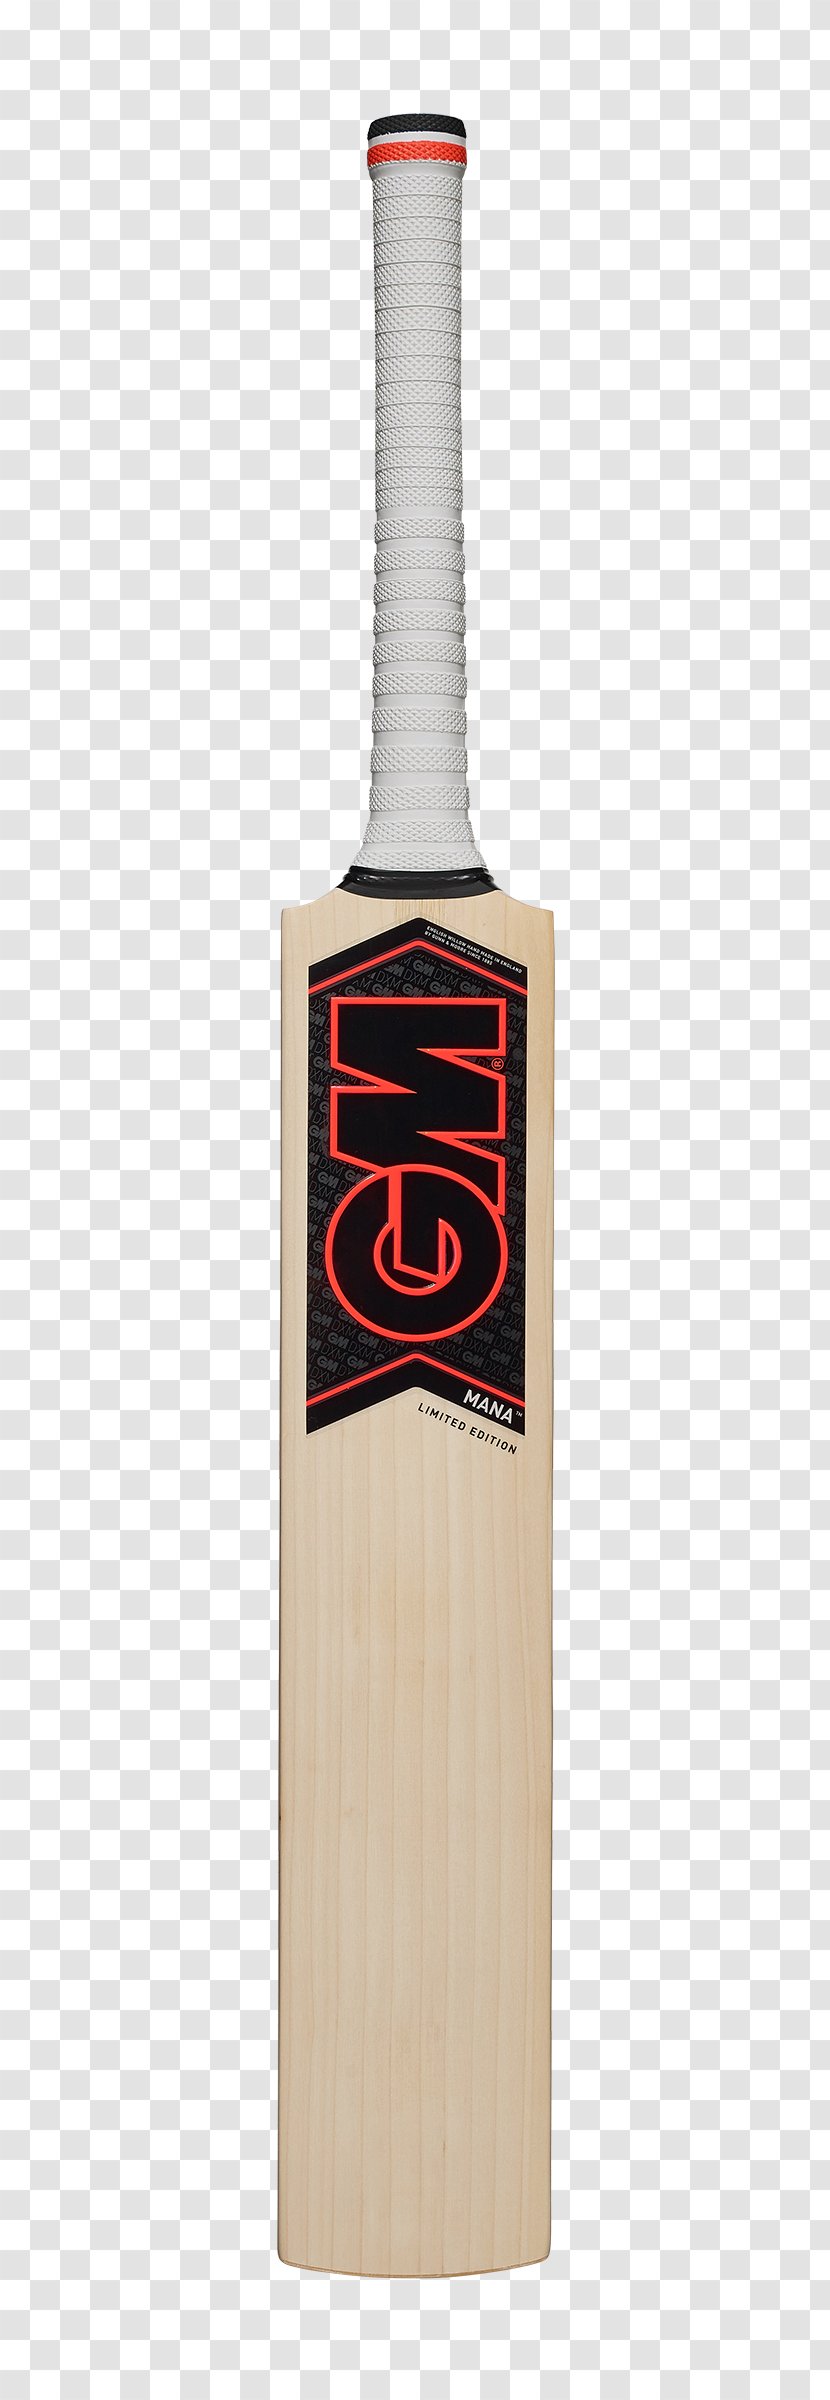 Cricket Bats Gunn & Moore Batting Clothing And Equipment - Glass Bottle - Bat Image Transparent PNG